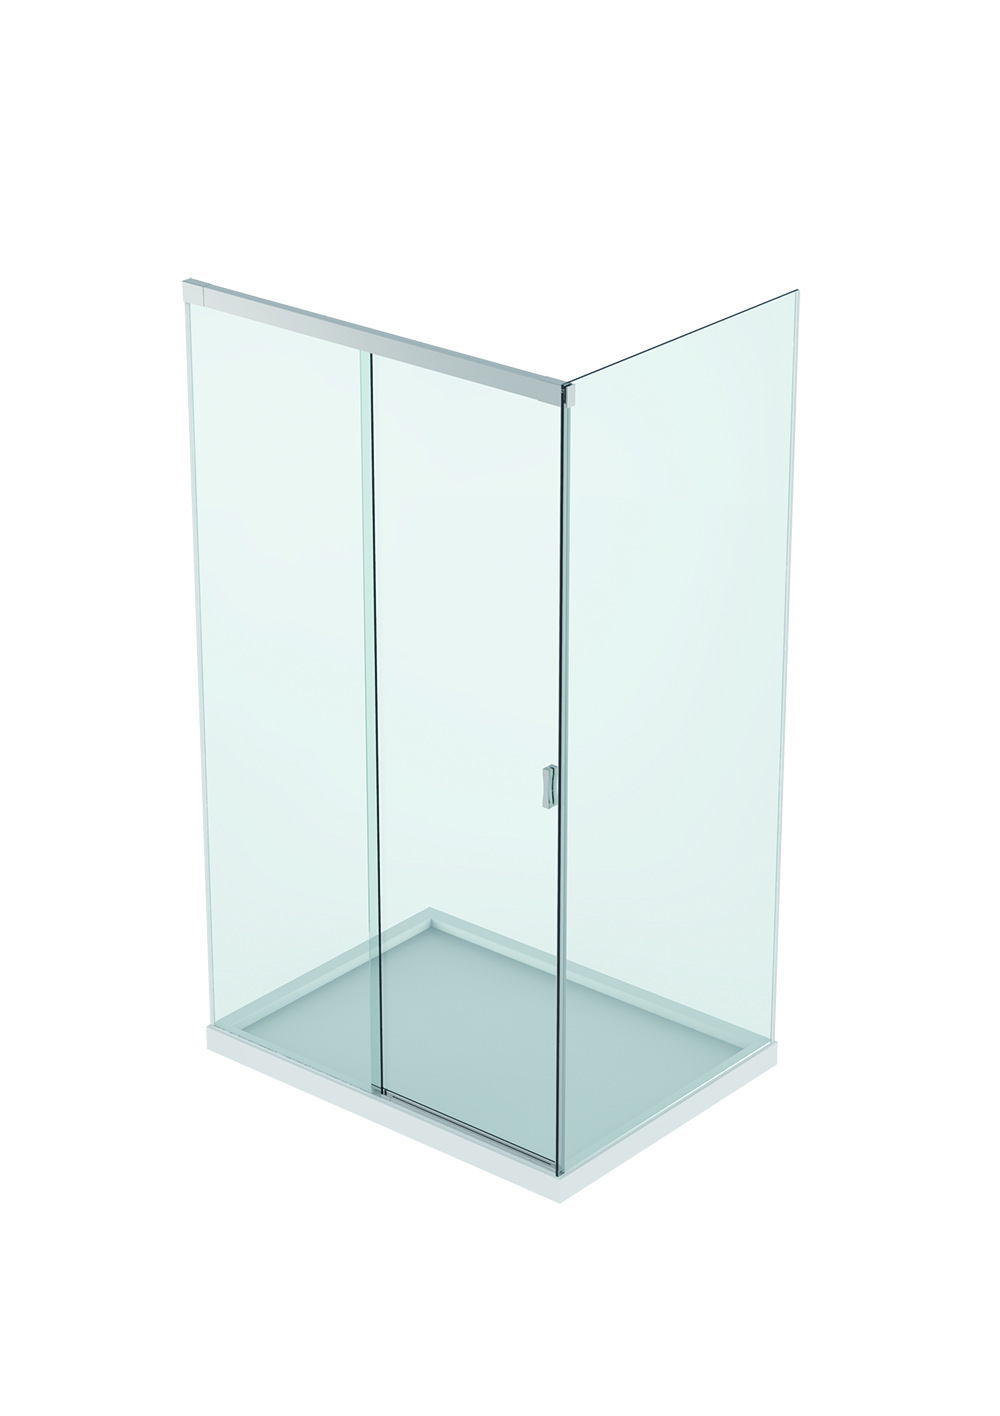 “PIUMA – Single Sliding Door With Two Fixed Side Glazings”